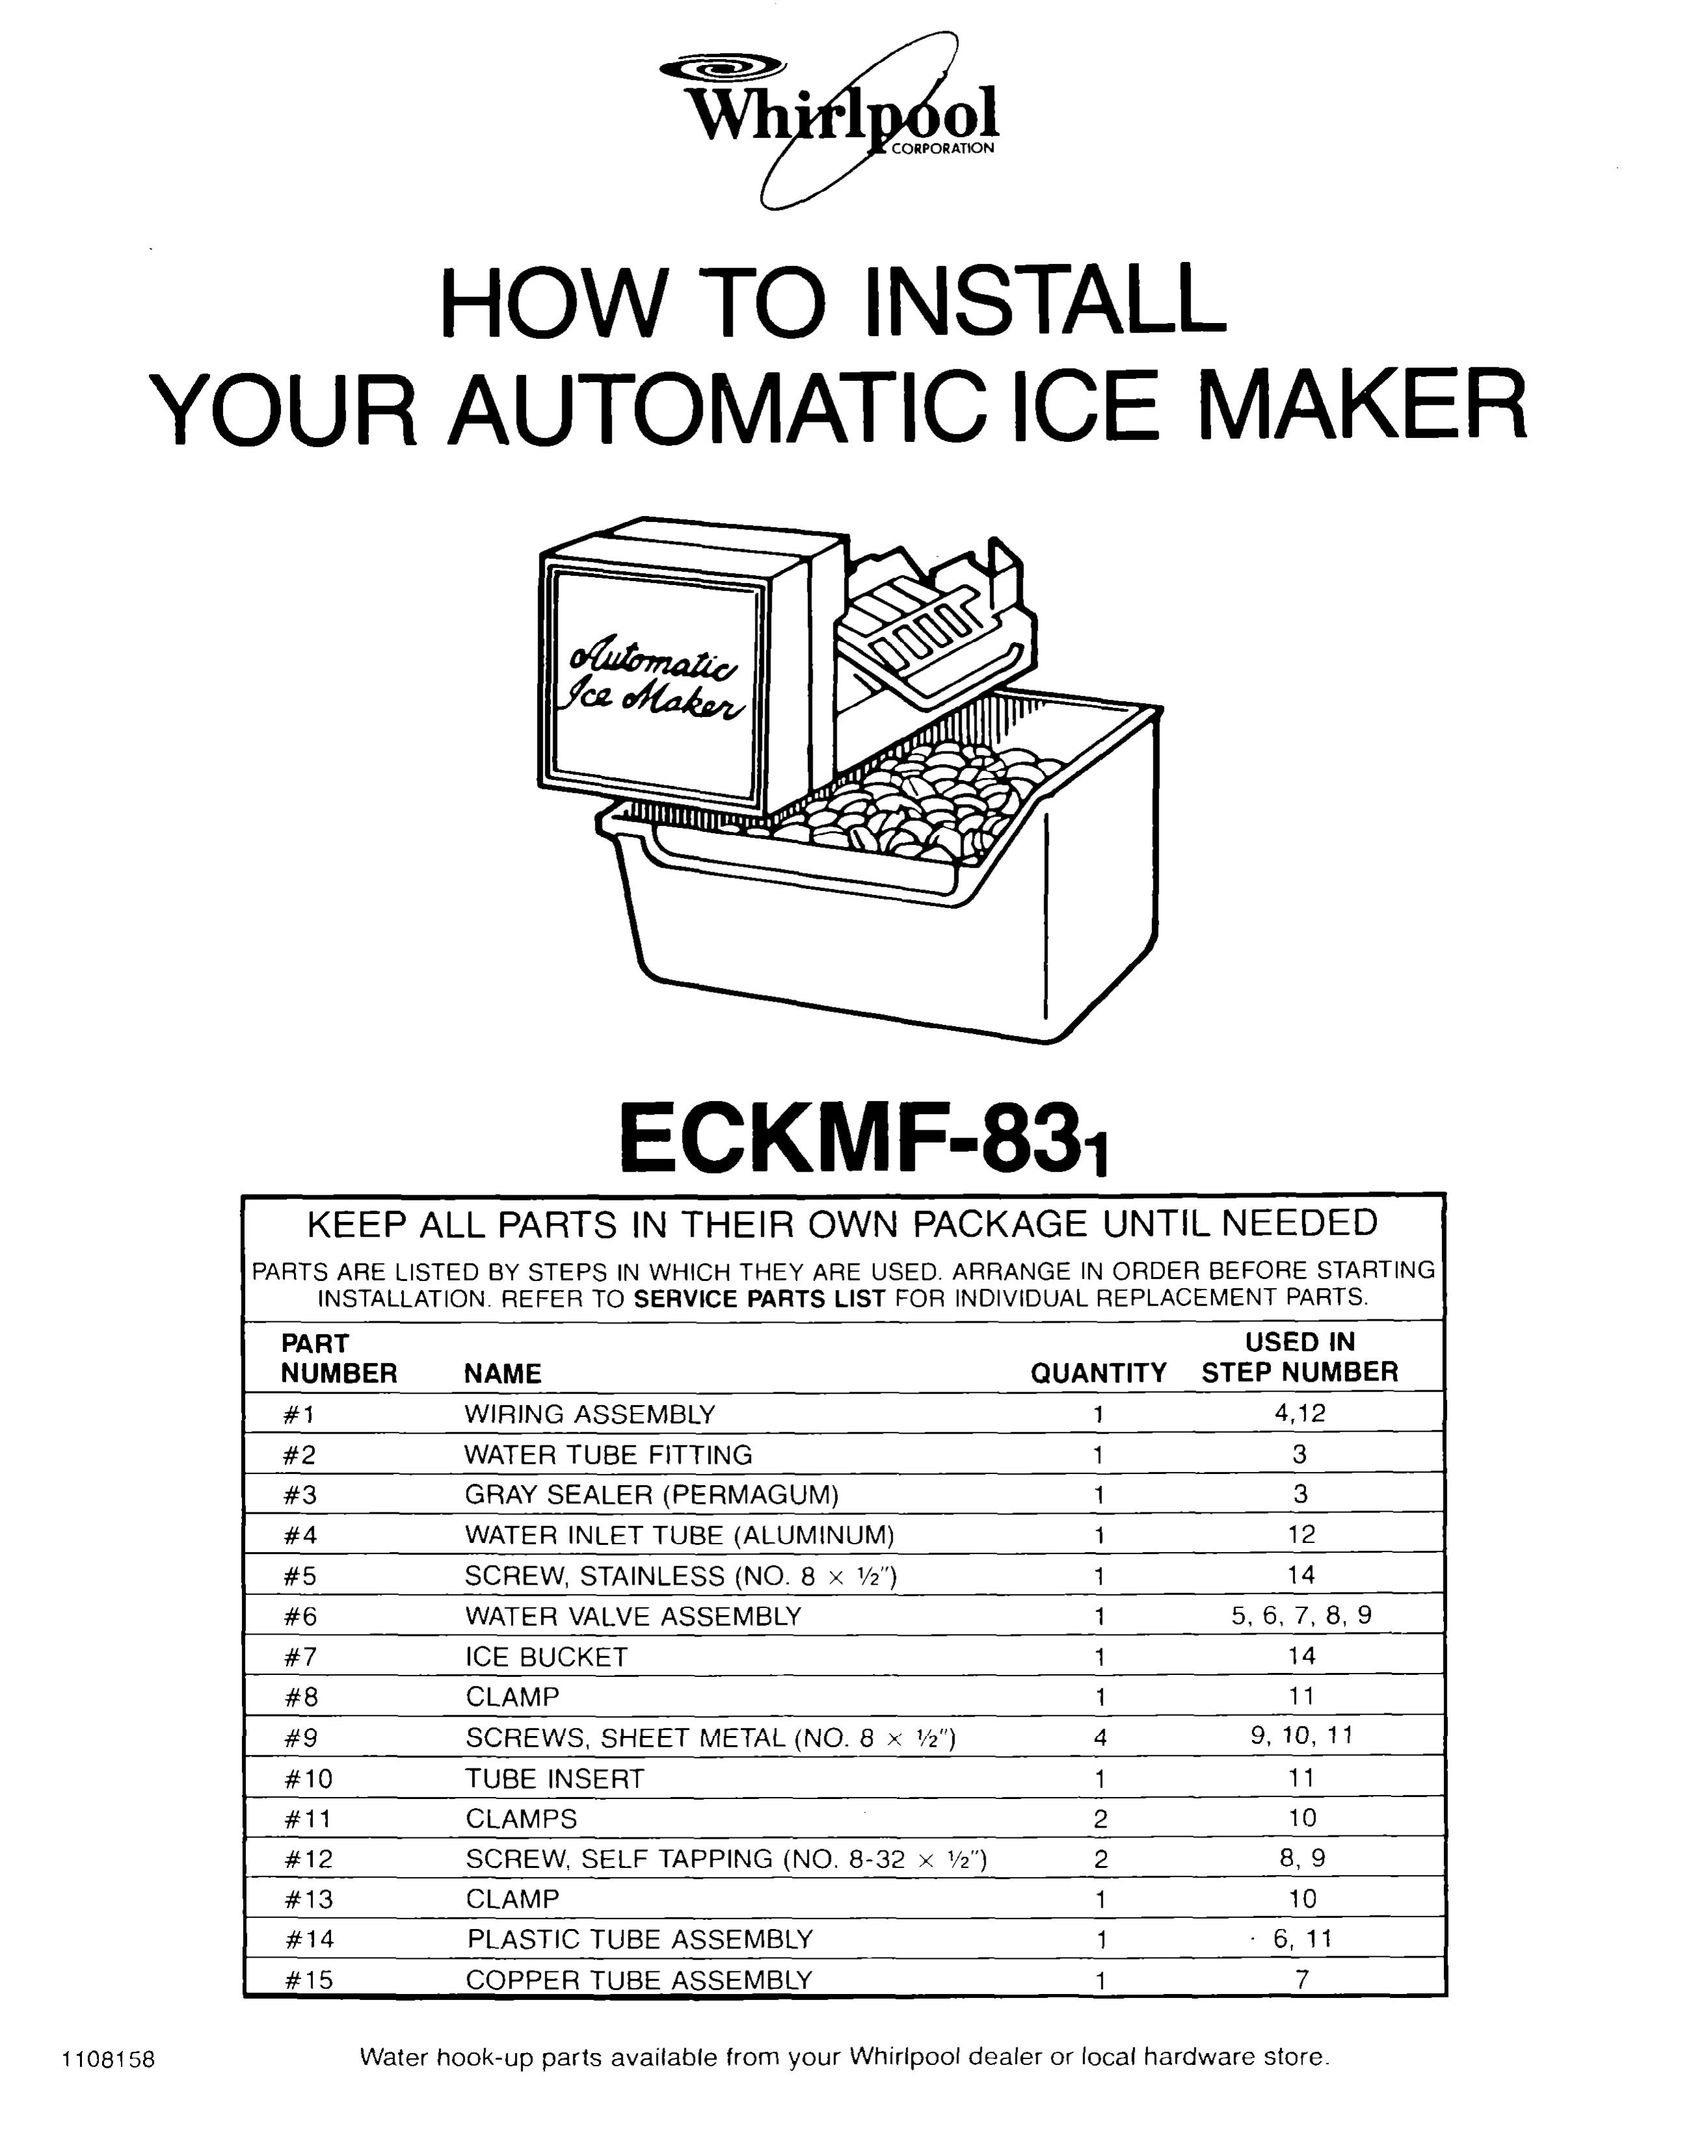 Whirlpool ECKMF-831 Ice Maker User Manual